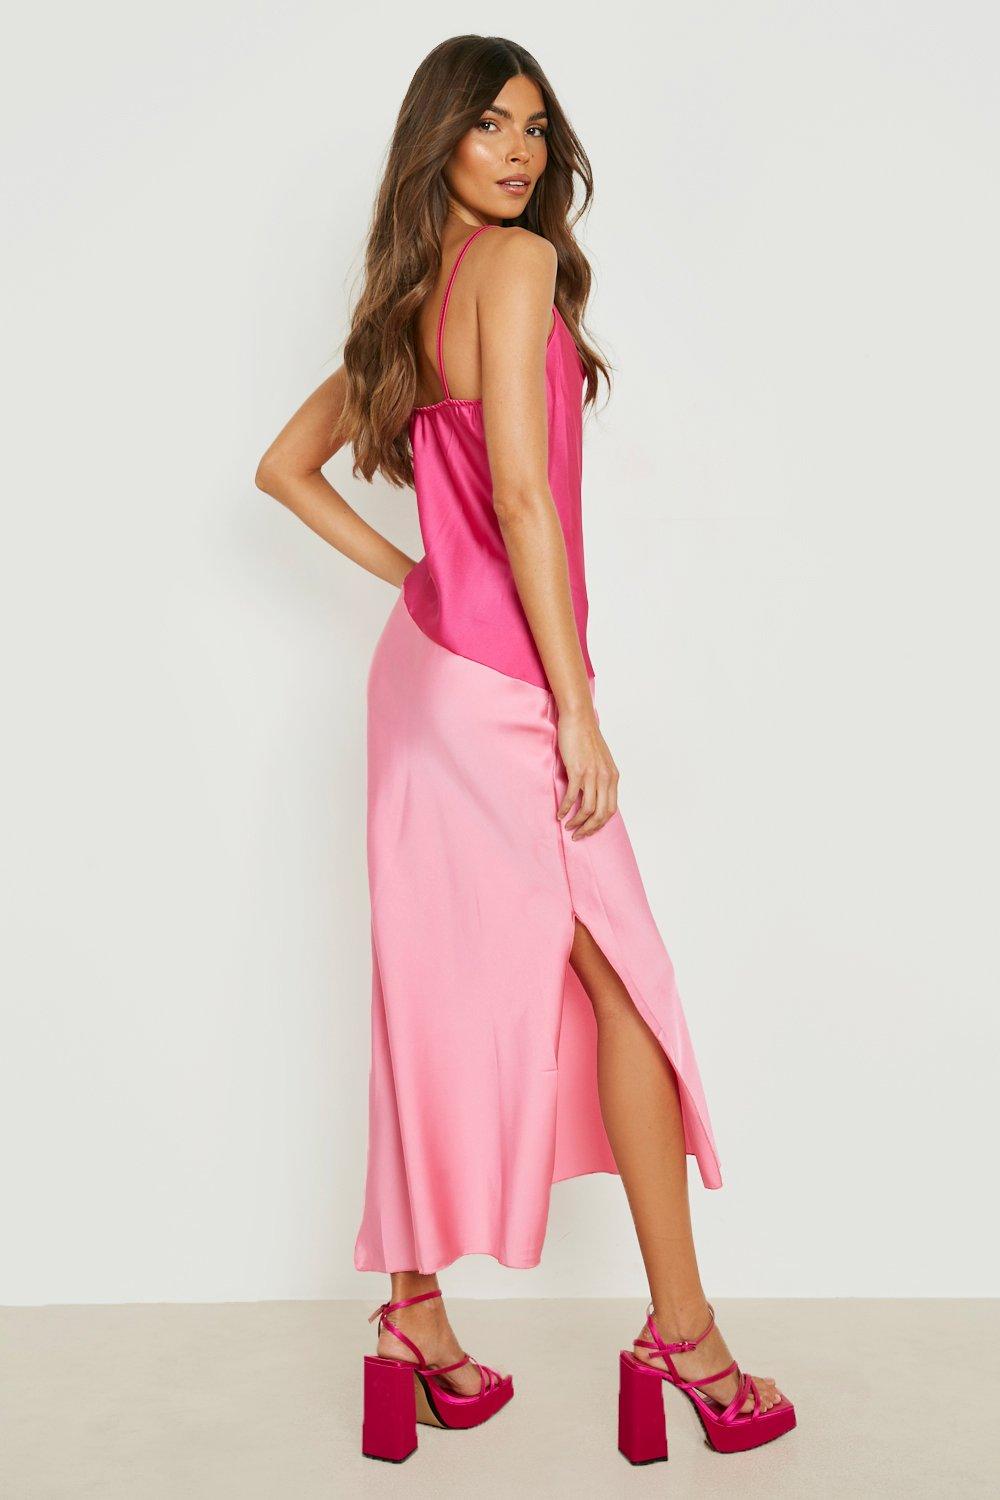 https://media.boohoo.com/i/boohoo/gzz19509_pink_xl_1/female-pink-satin-color-block-slip-dress